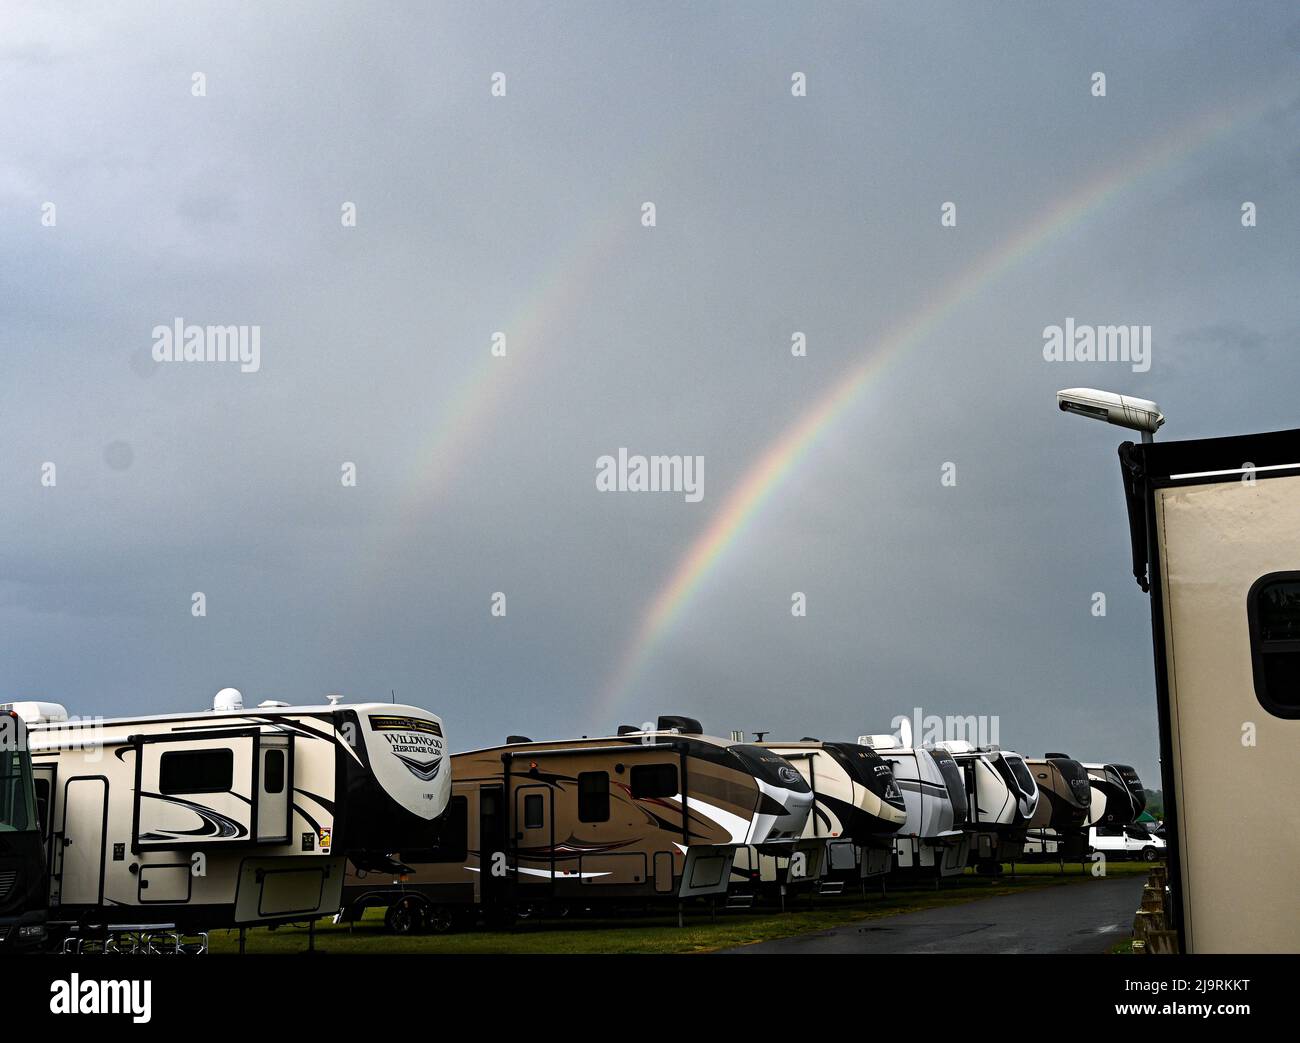 A double rainbow glistening on a dark moody sky, rising above a row of American RV trailers, Winnebago's Stock Photo